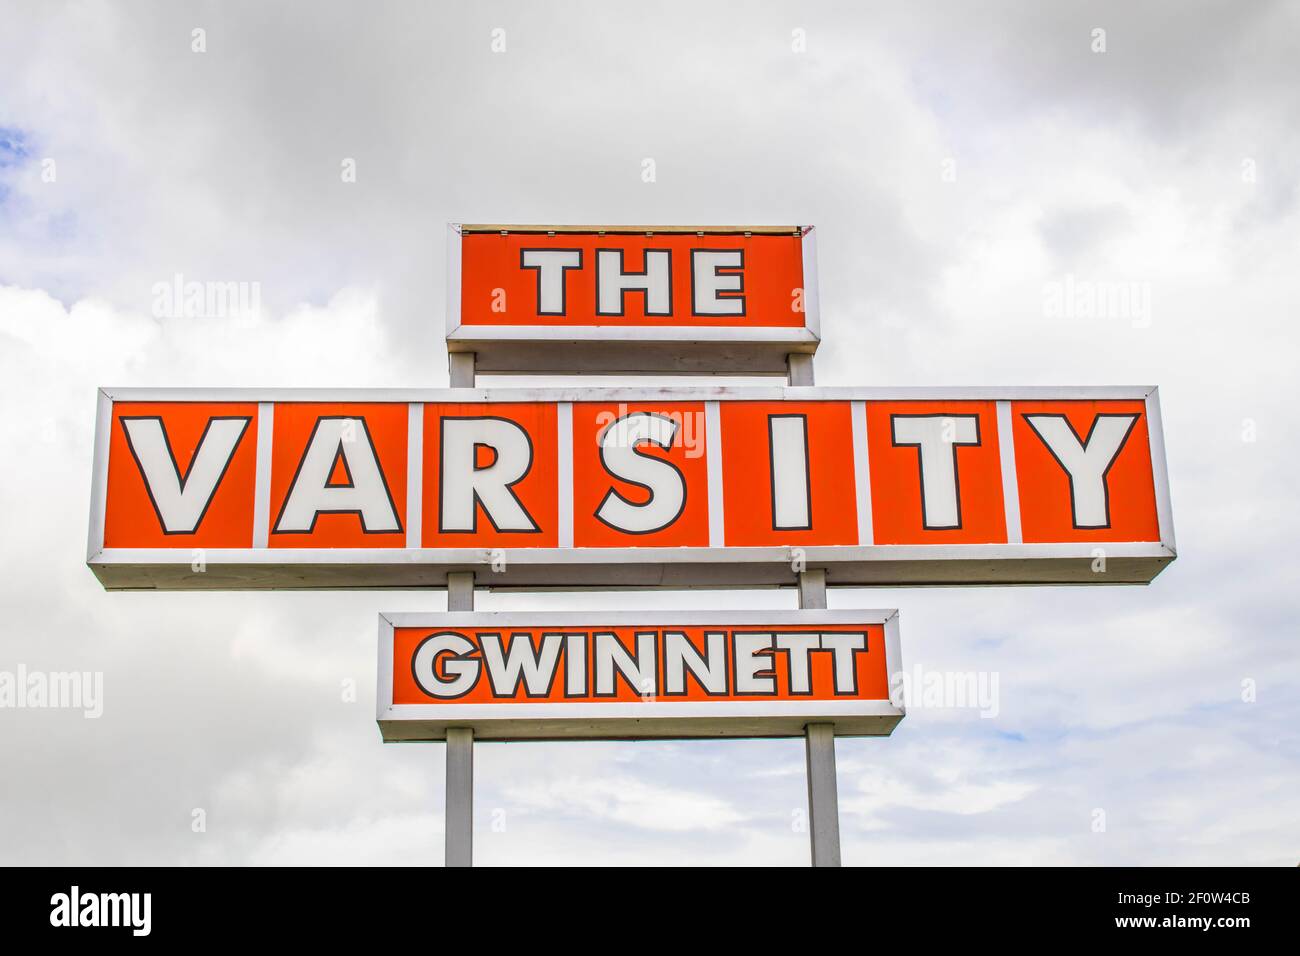 Gwinnett County, GA / USA - 07 29 20: Il cartello stradale di Varsity of Gwinnett Foto Stock